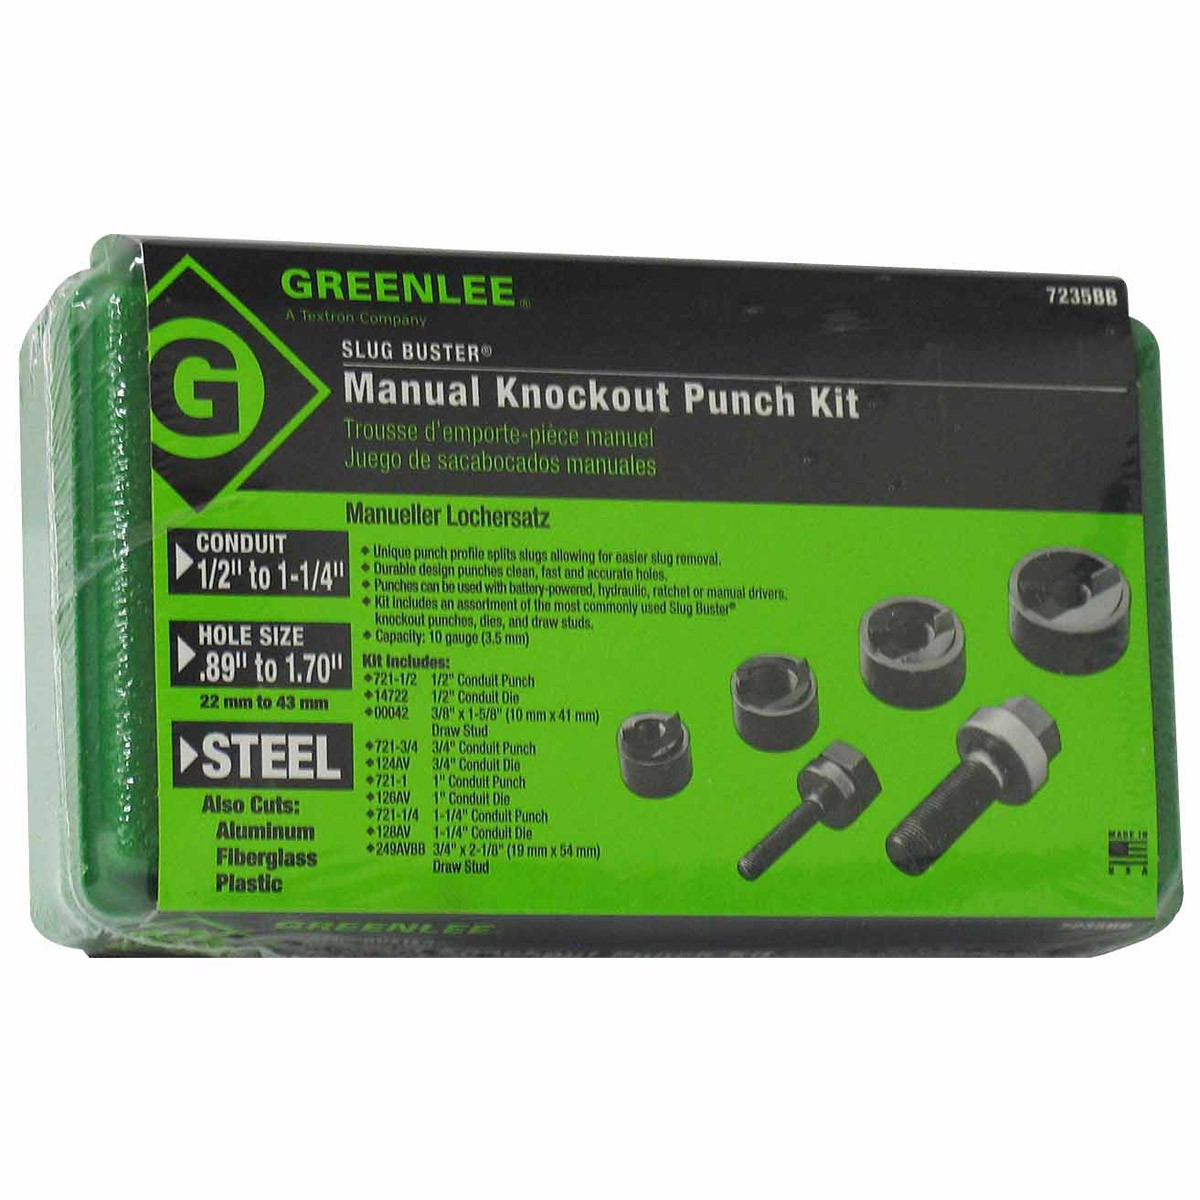 Greenlee 7235BB 1/2" - 1-1/4" Conduit Size Manual Slug-Buster Knockout Punch Kit